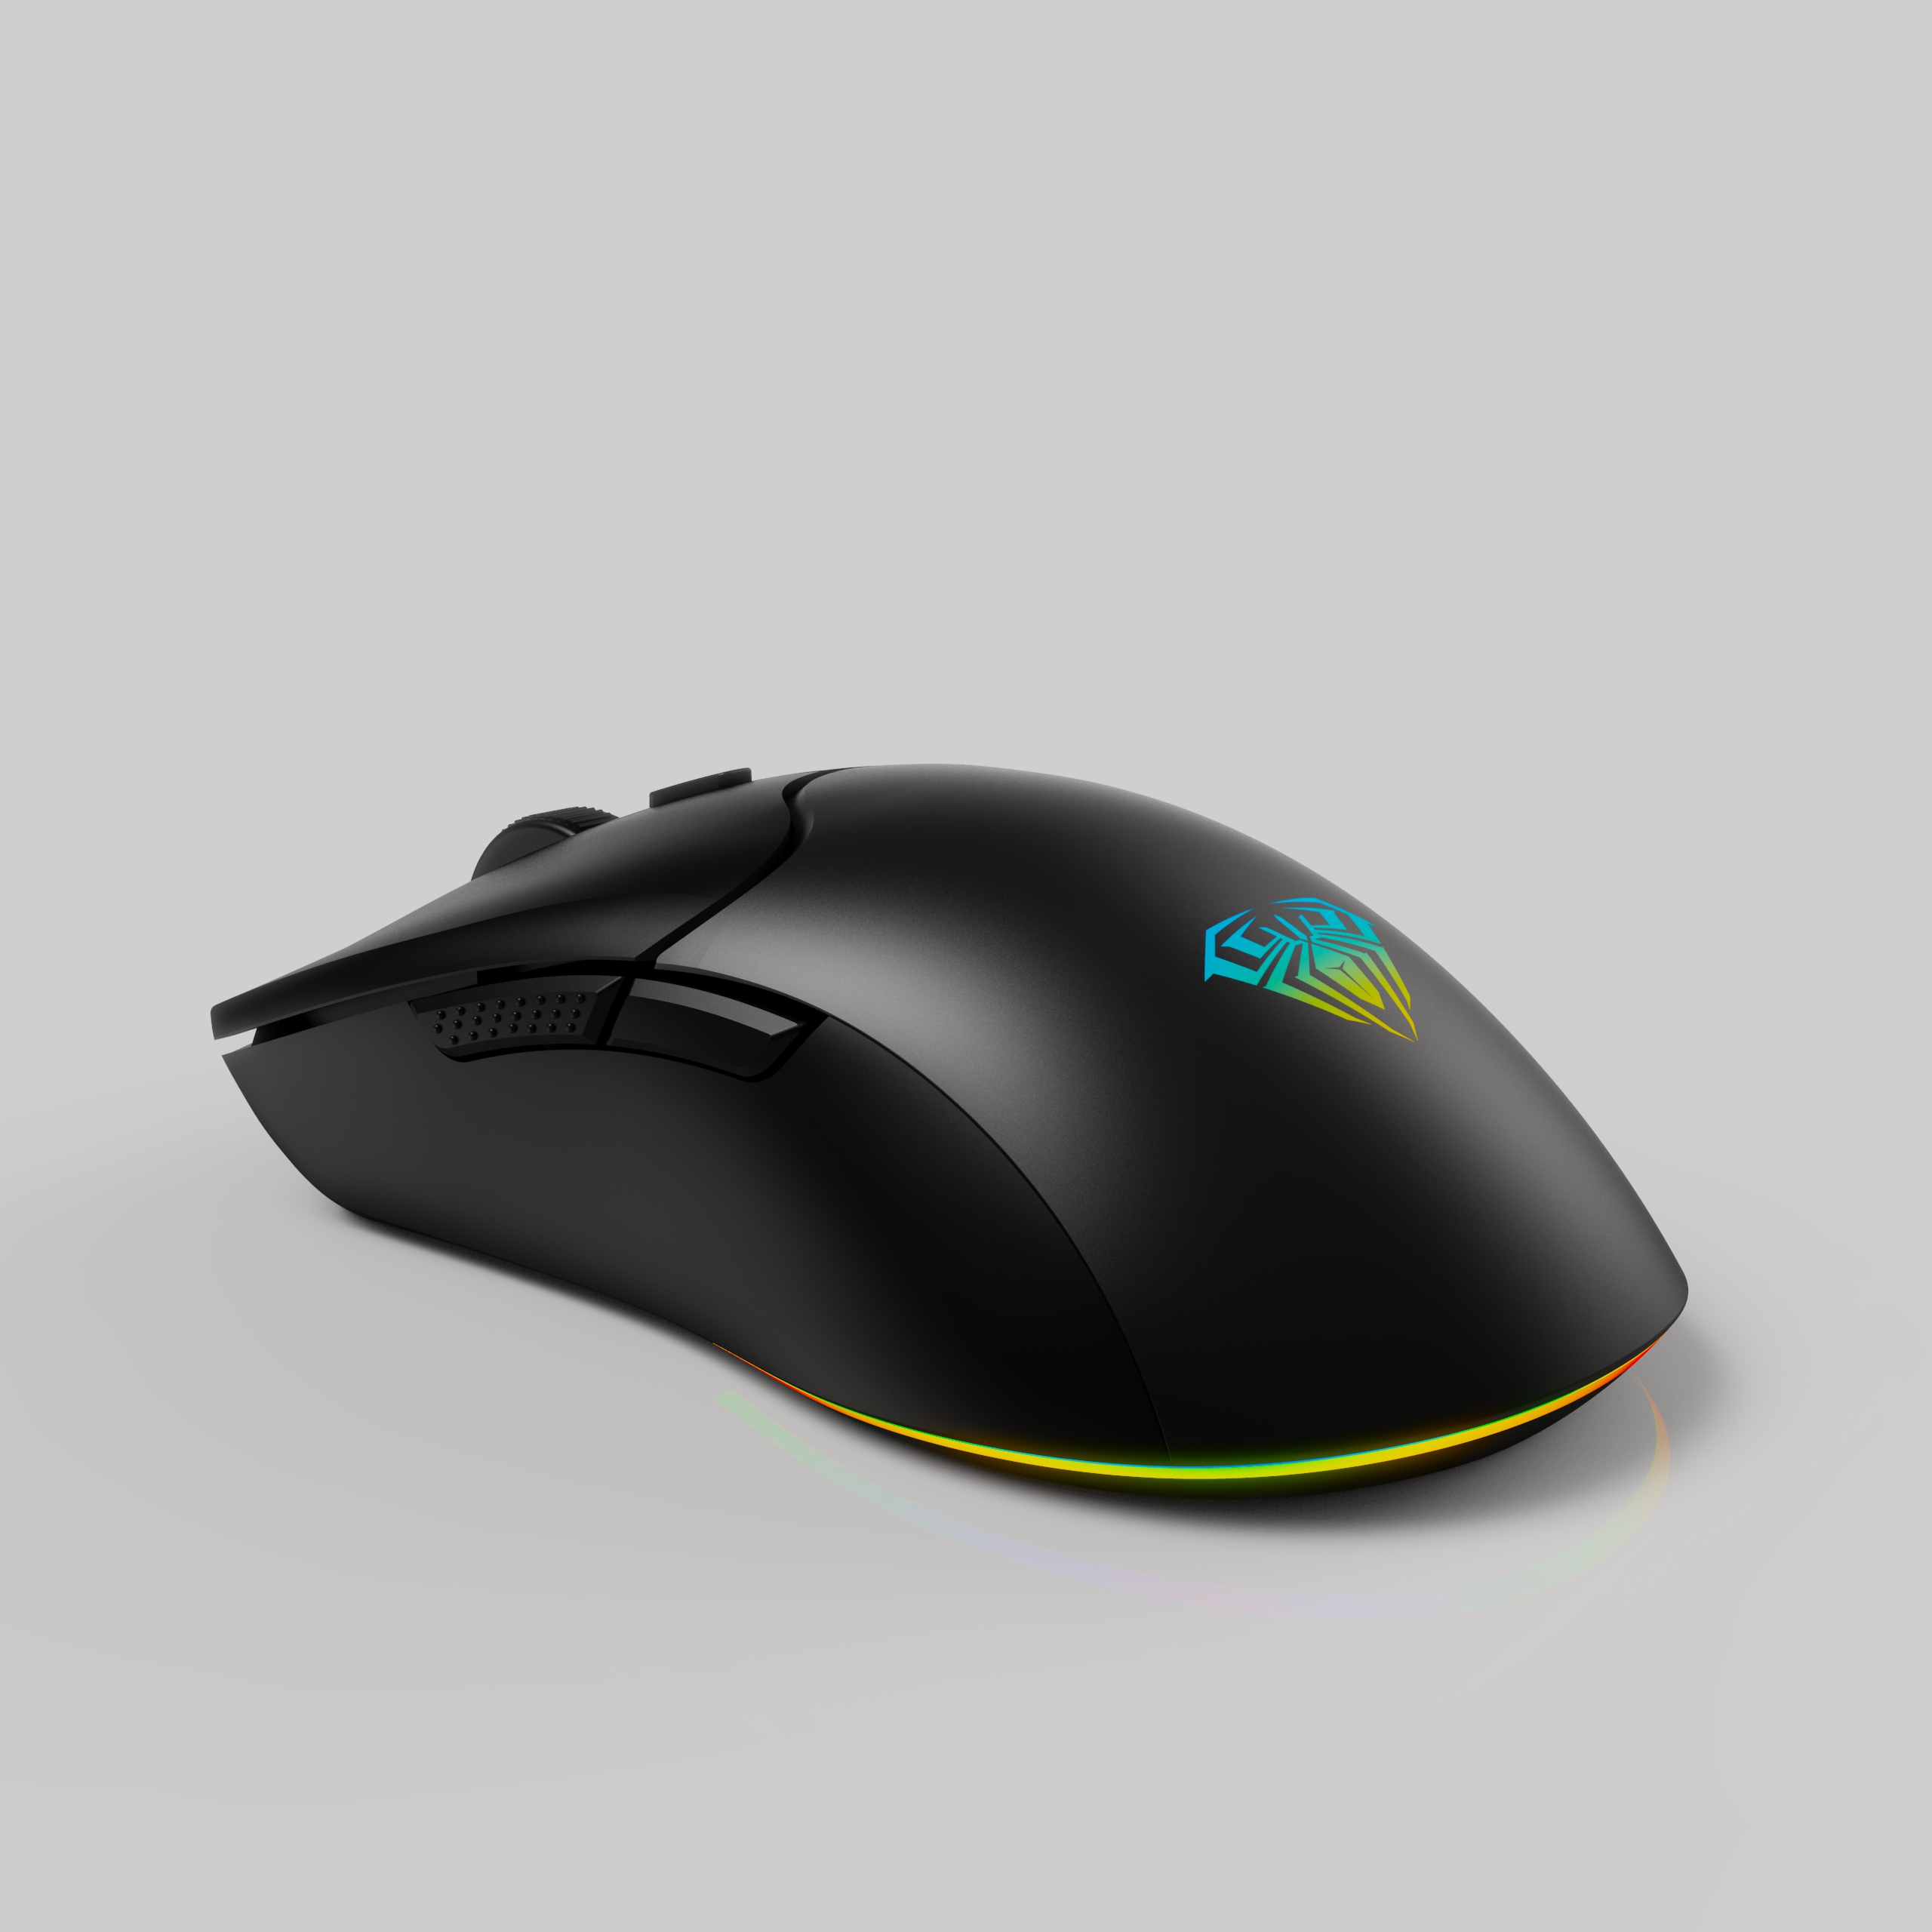 AULA S13 Black, RGB Gaming mice with Sid